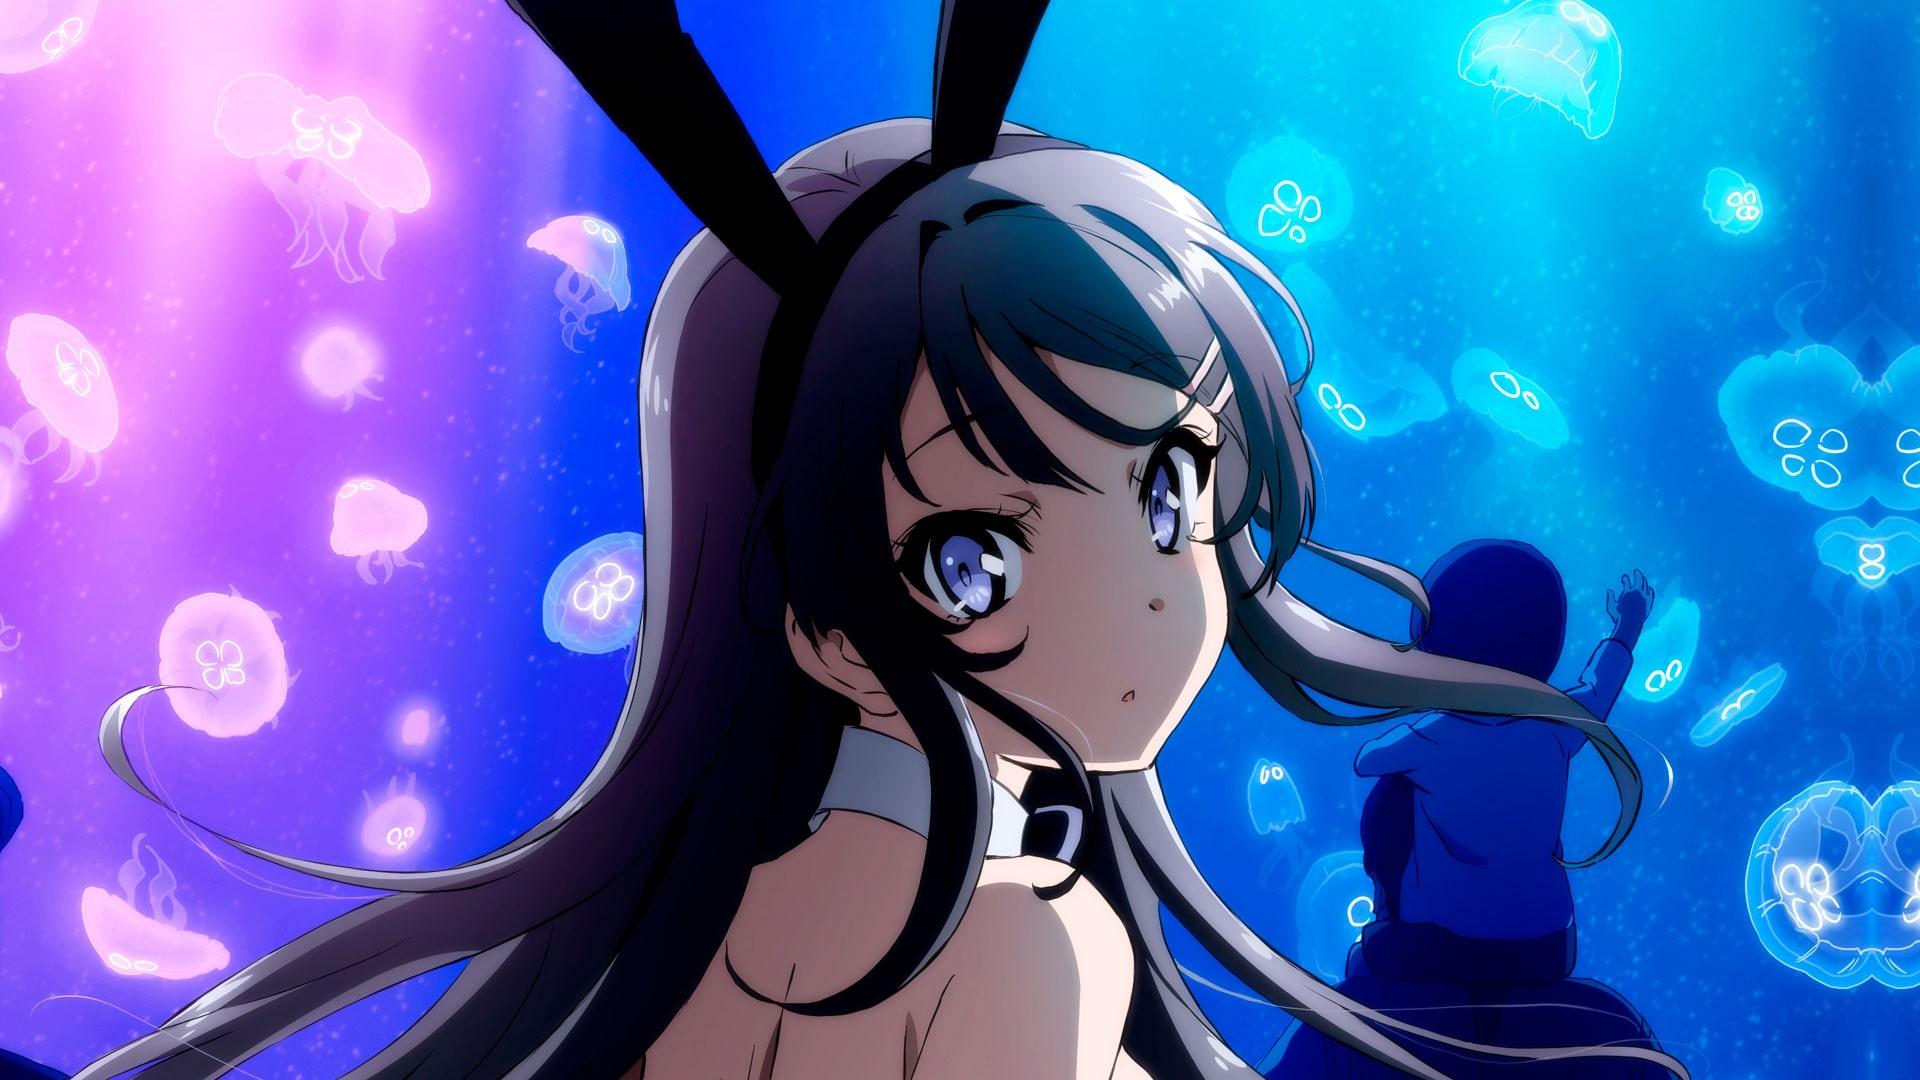 El anime Seishun Buta Yarou contará con un proyecto secuela — Kudasai